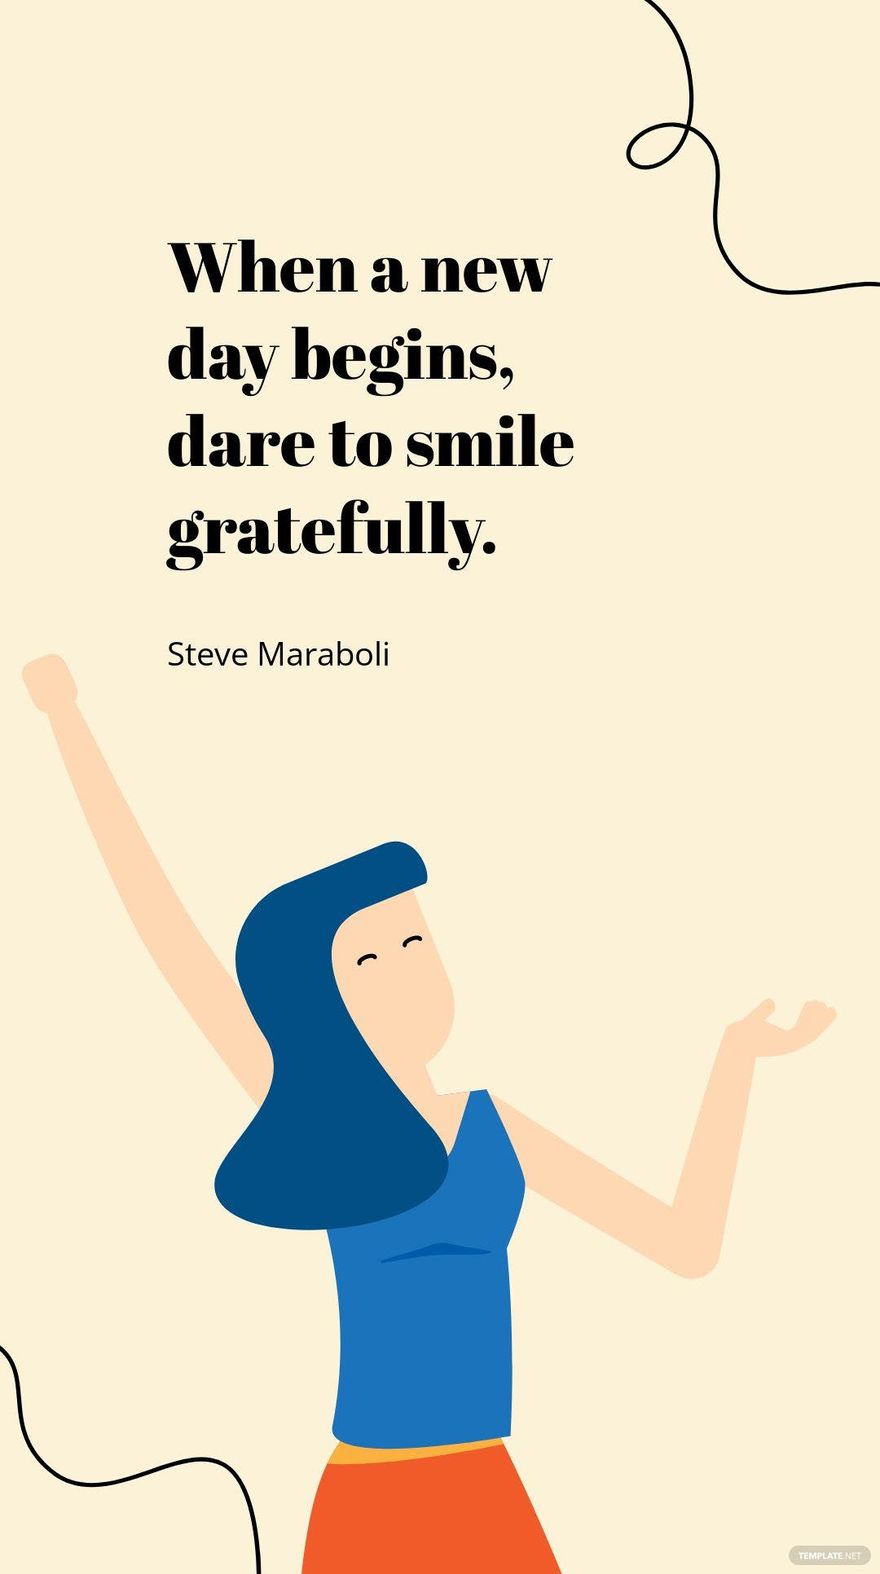 Steve Maraboli - When a new day begins, dare to smile gratefully.